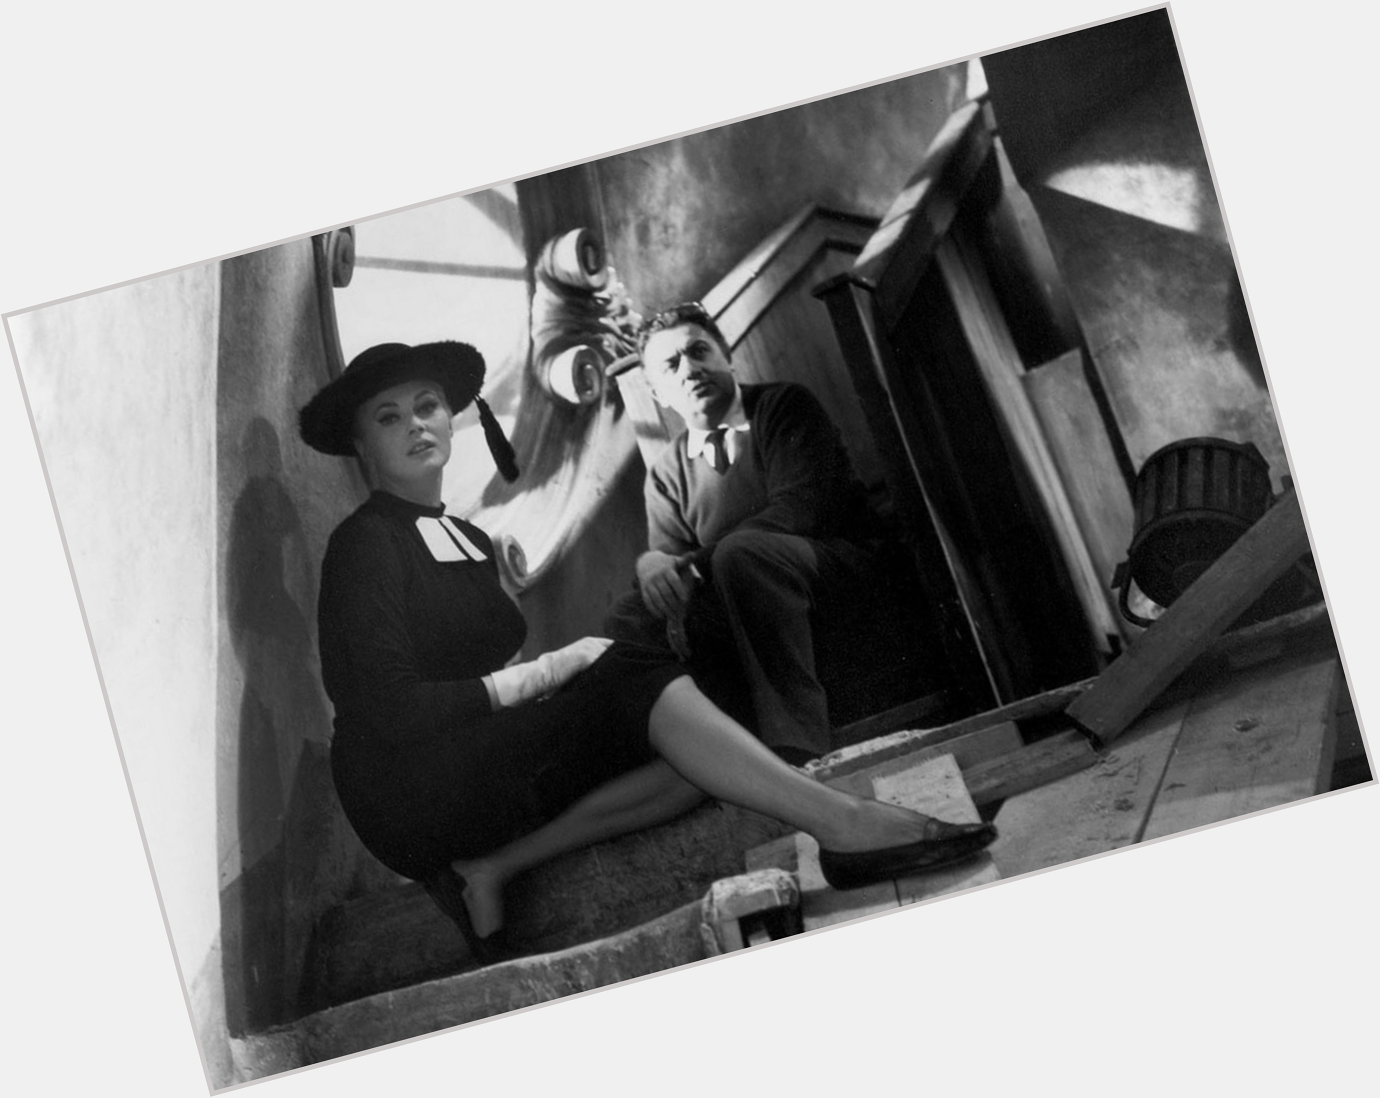 And happy birthday to Anita Ekberg!

Here with Fellini on La Dolce Vita... 